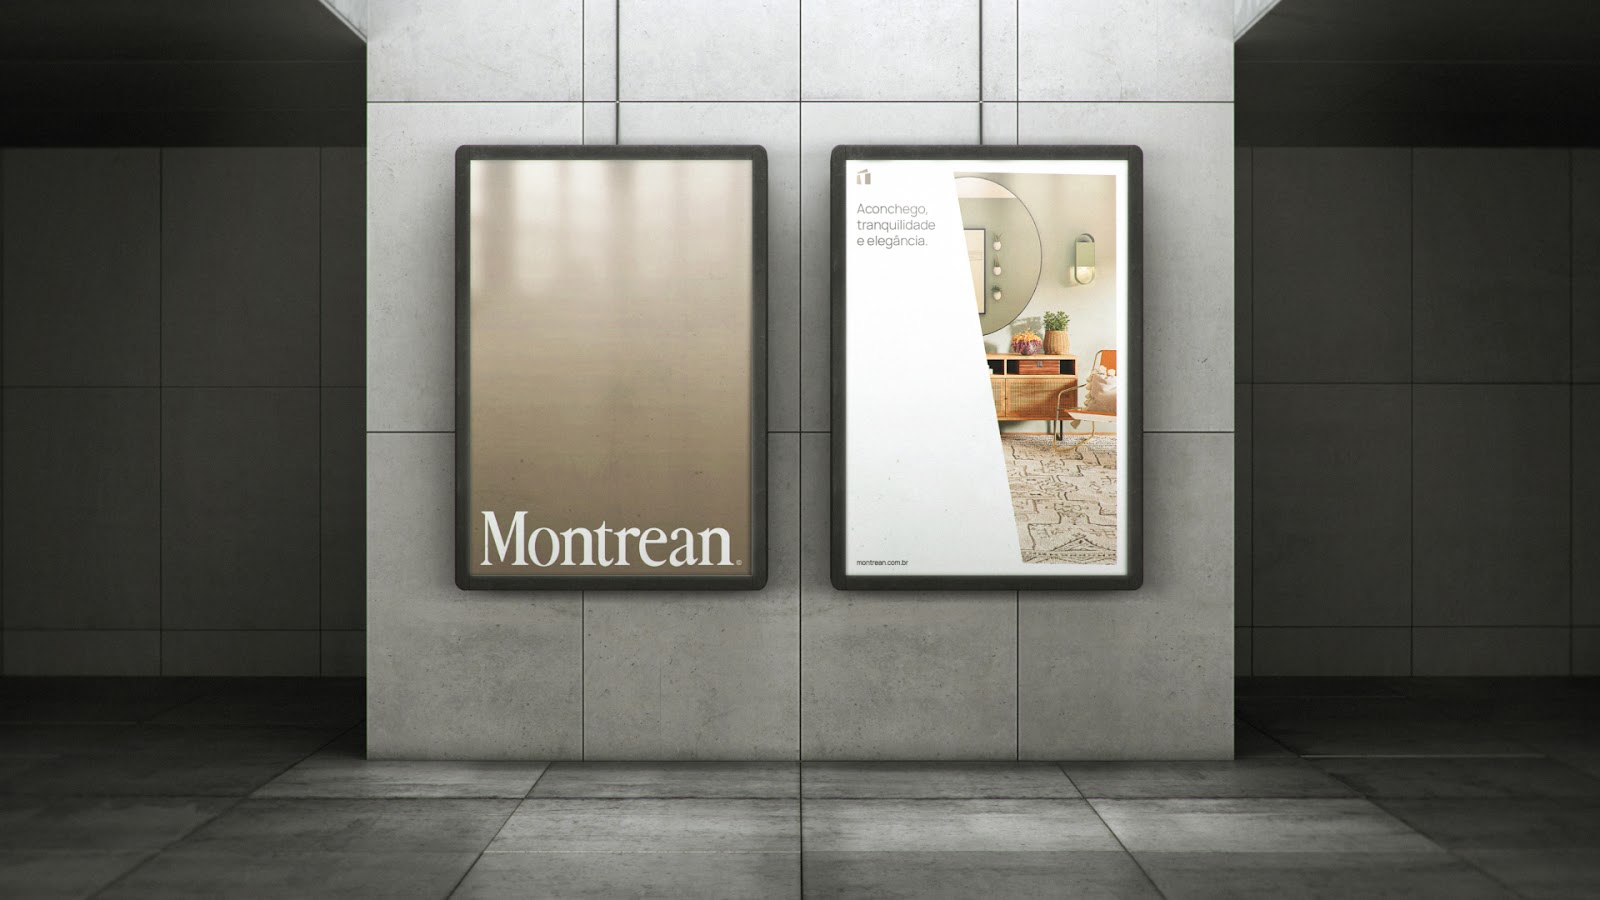 Montrean房地产公司品牌形象设计